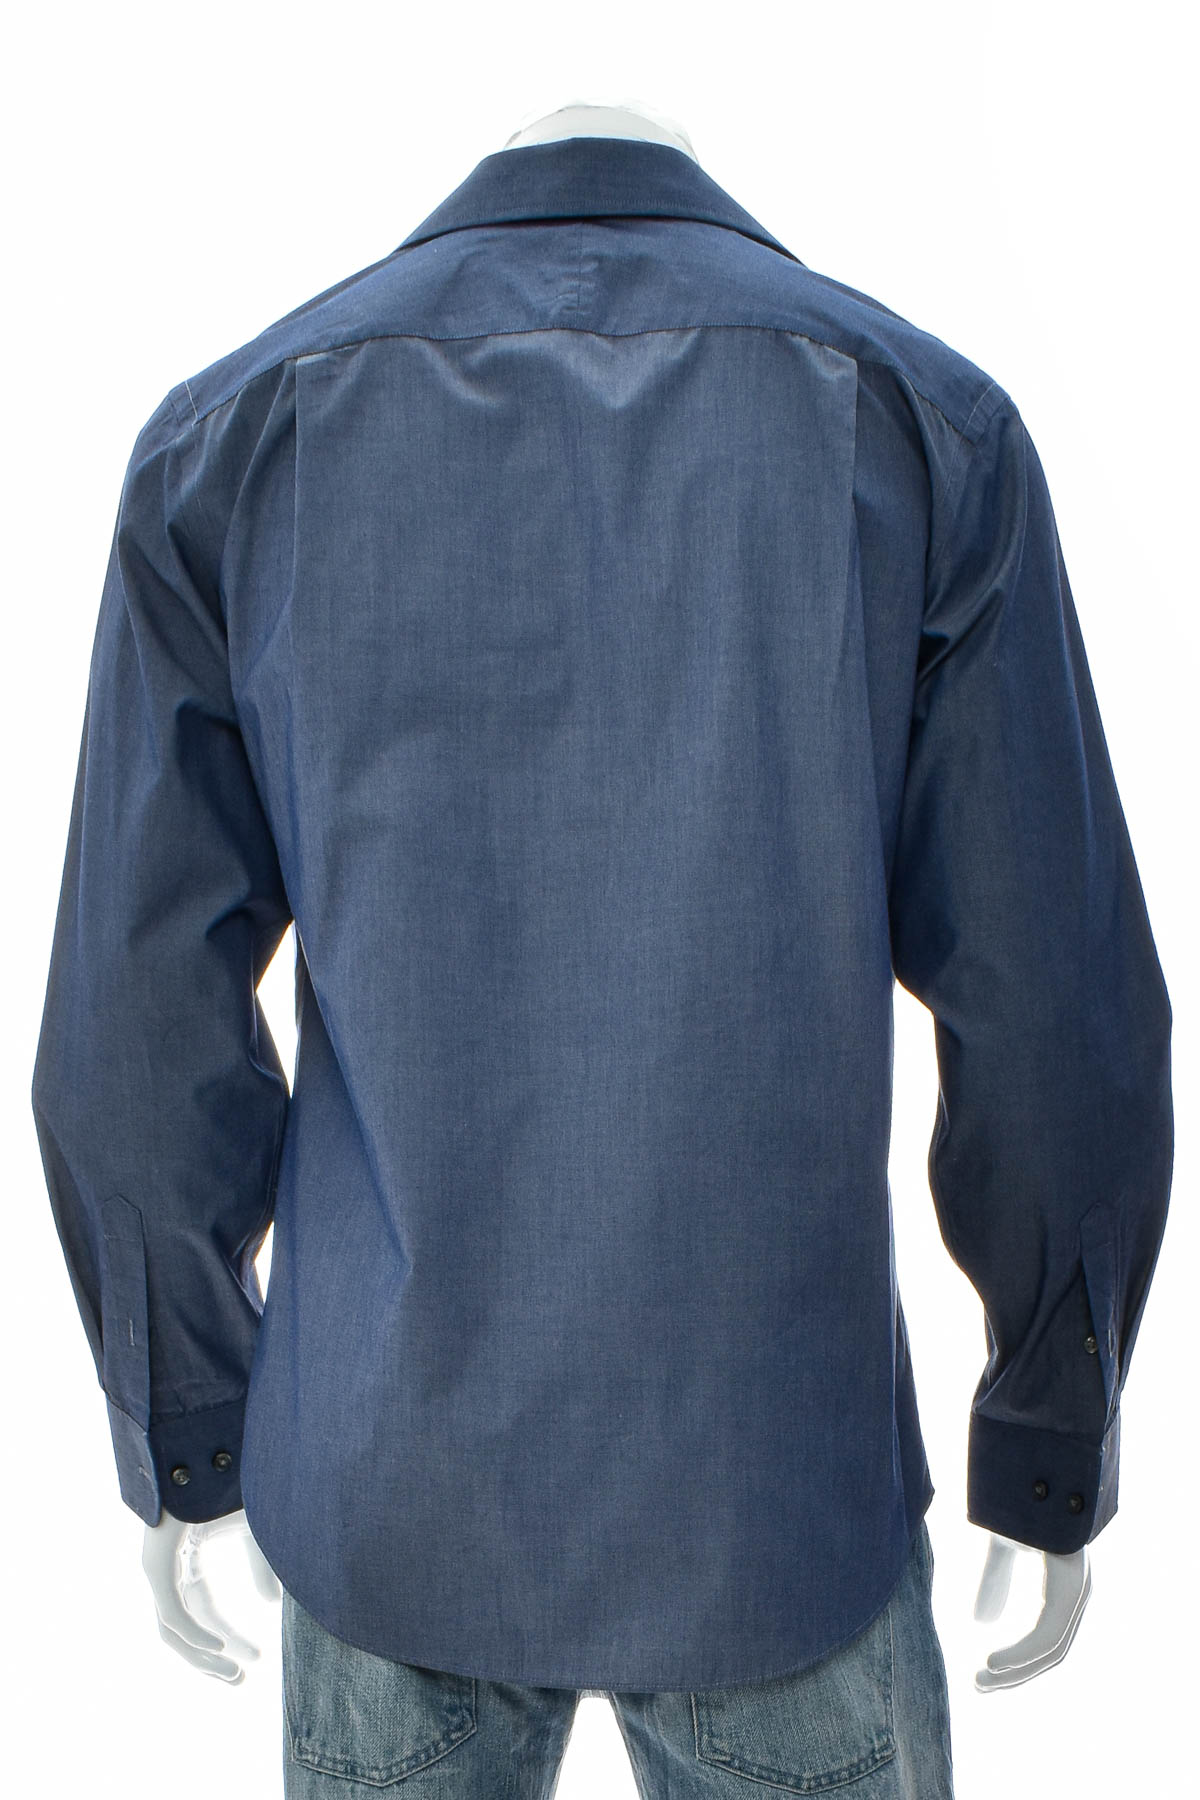 Men's shirt - MERONA - 1